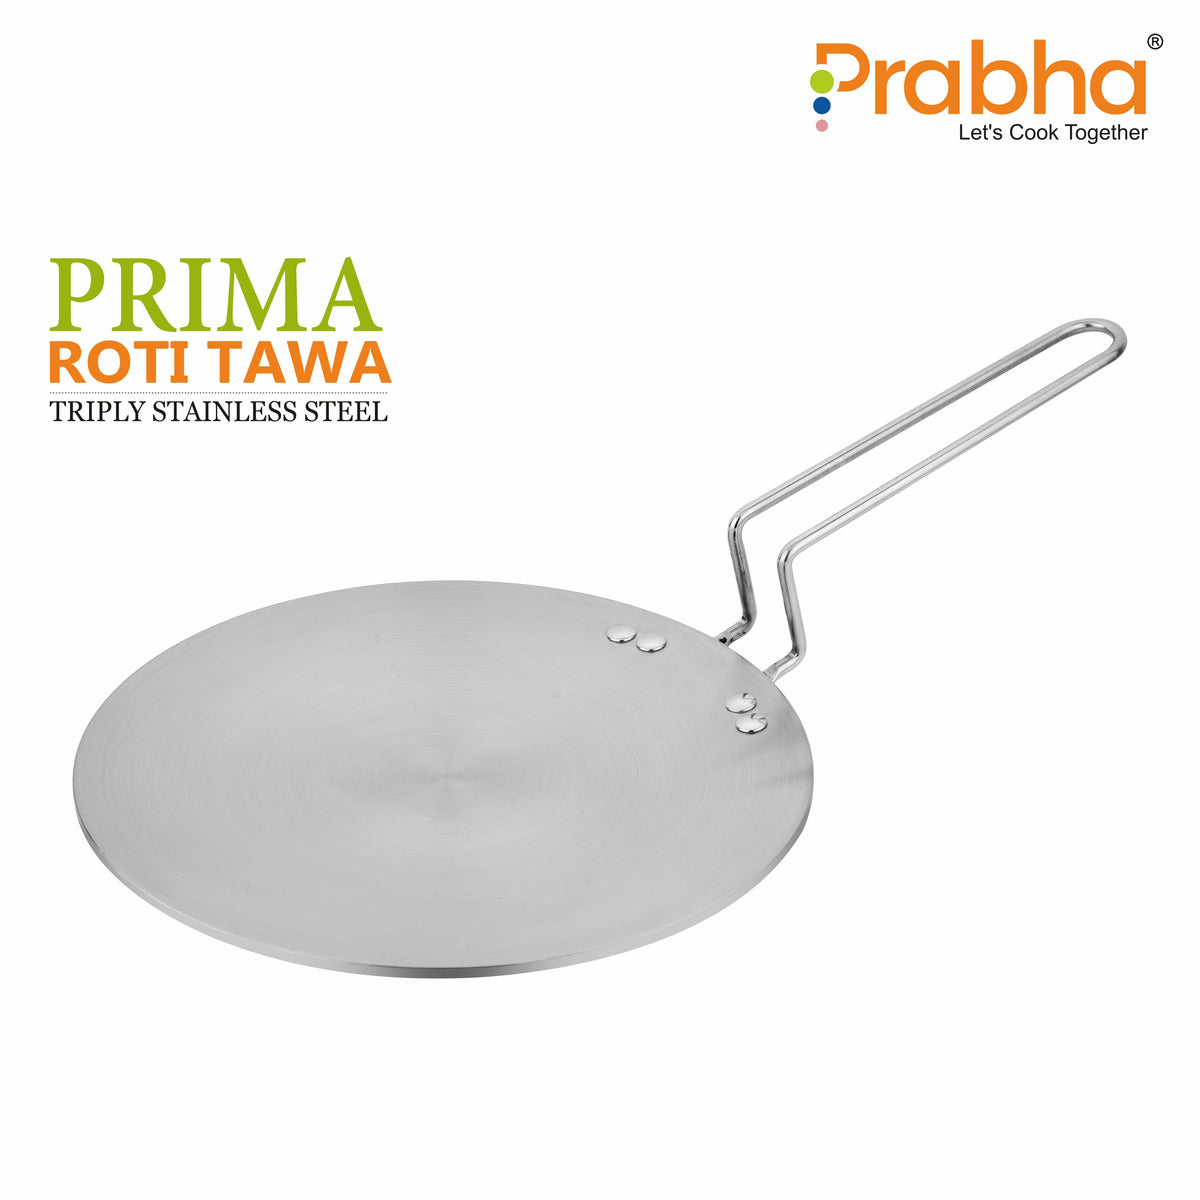 Prabha Tri-ply Stainless Steel Induction Compatible Roti Tawa Flat